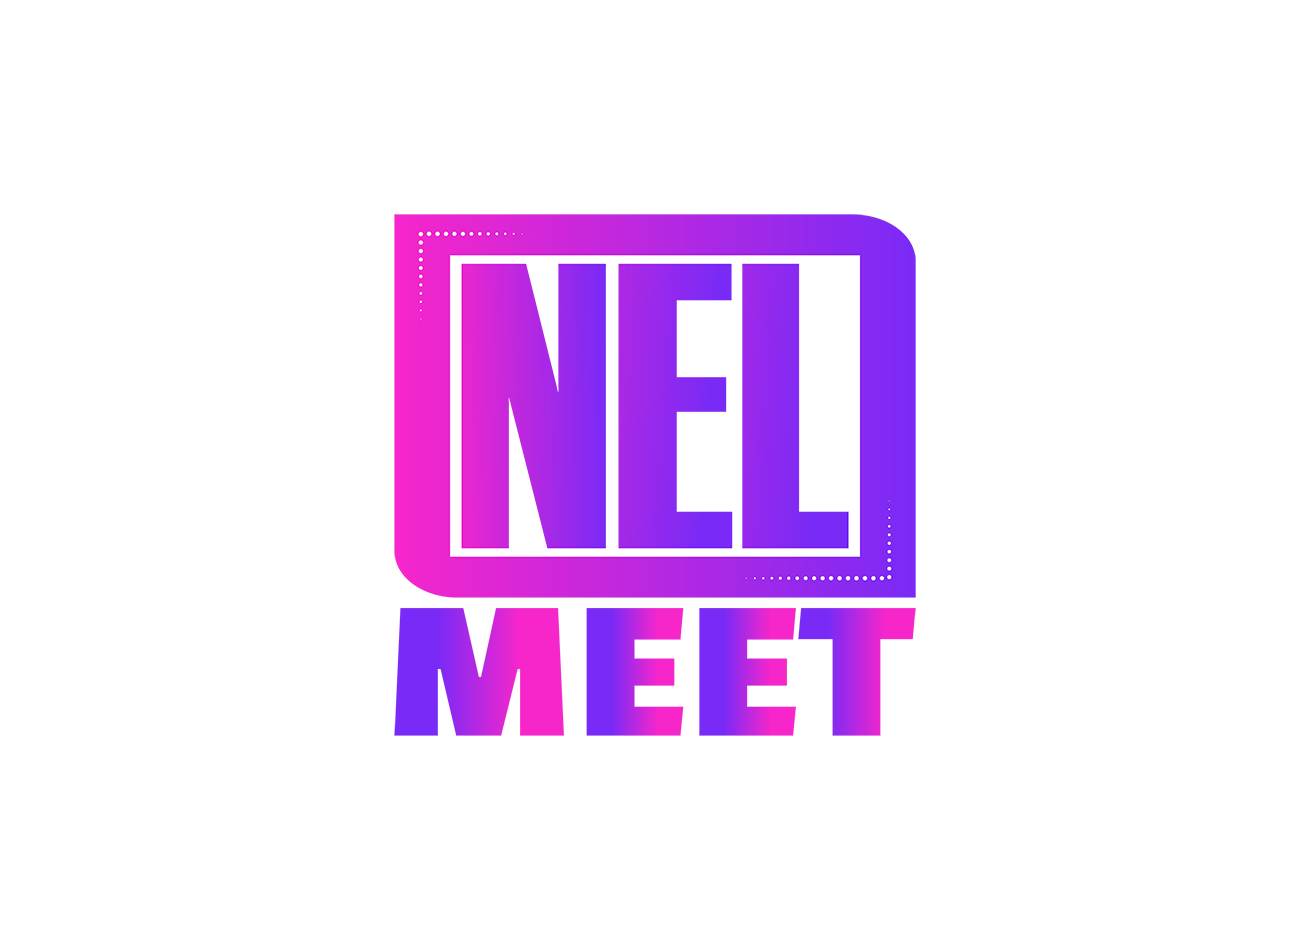 NelMeet 仮想カンファレンス